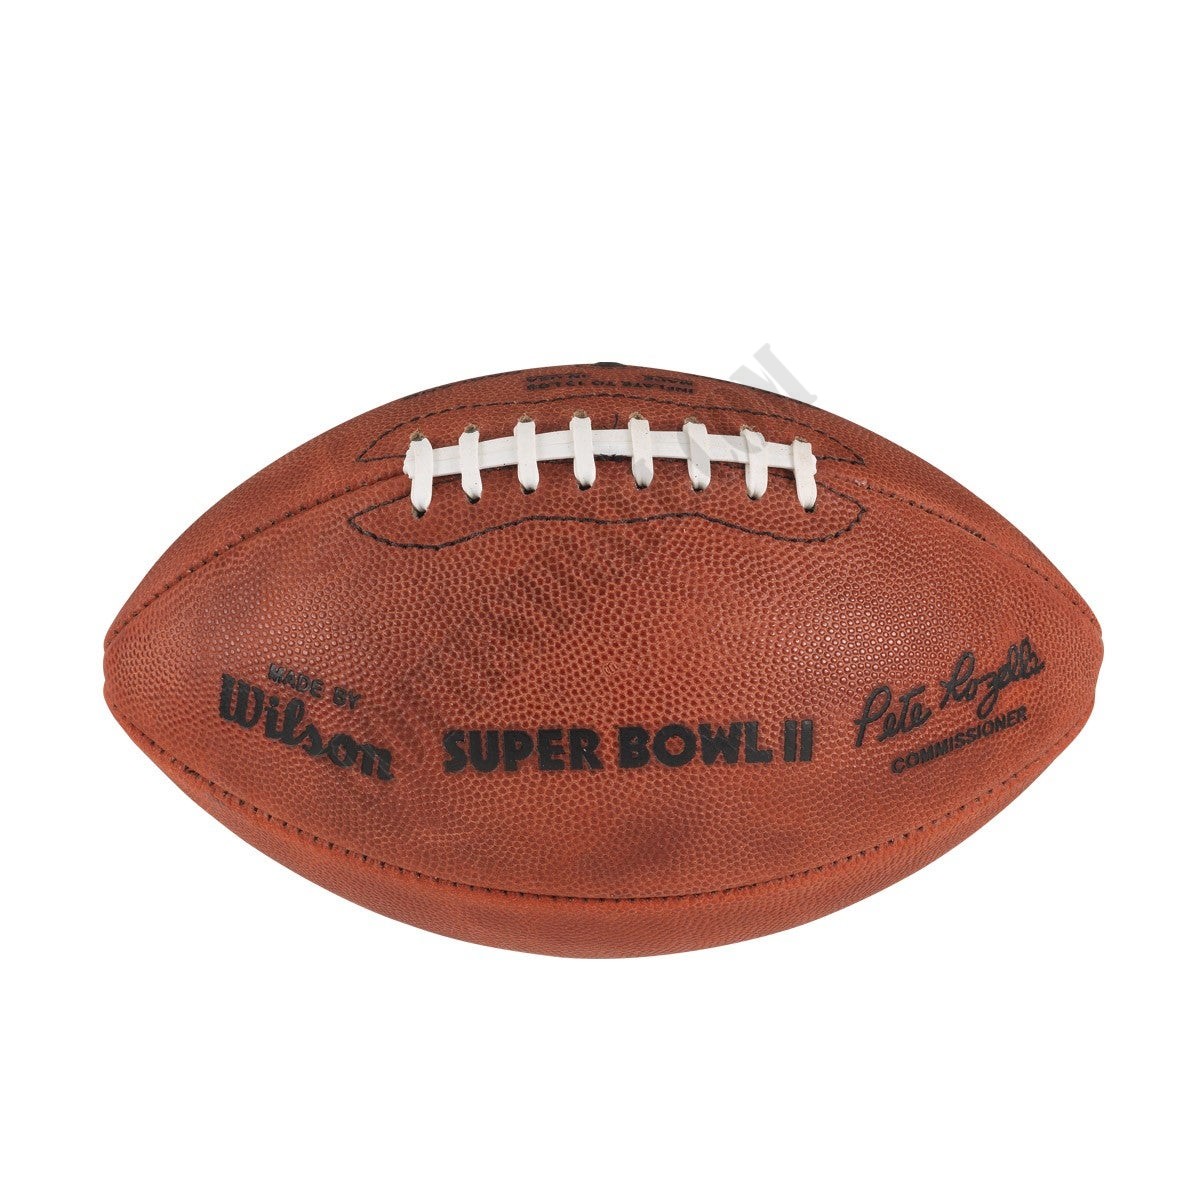 Super Bowl II Game Football - Green Bay Packers ● Wilson Promotions - Super Bowl II Game Football - Green Bay Packers ● Wilson Promotions